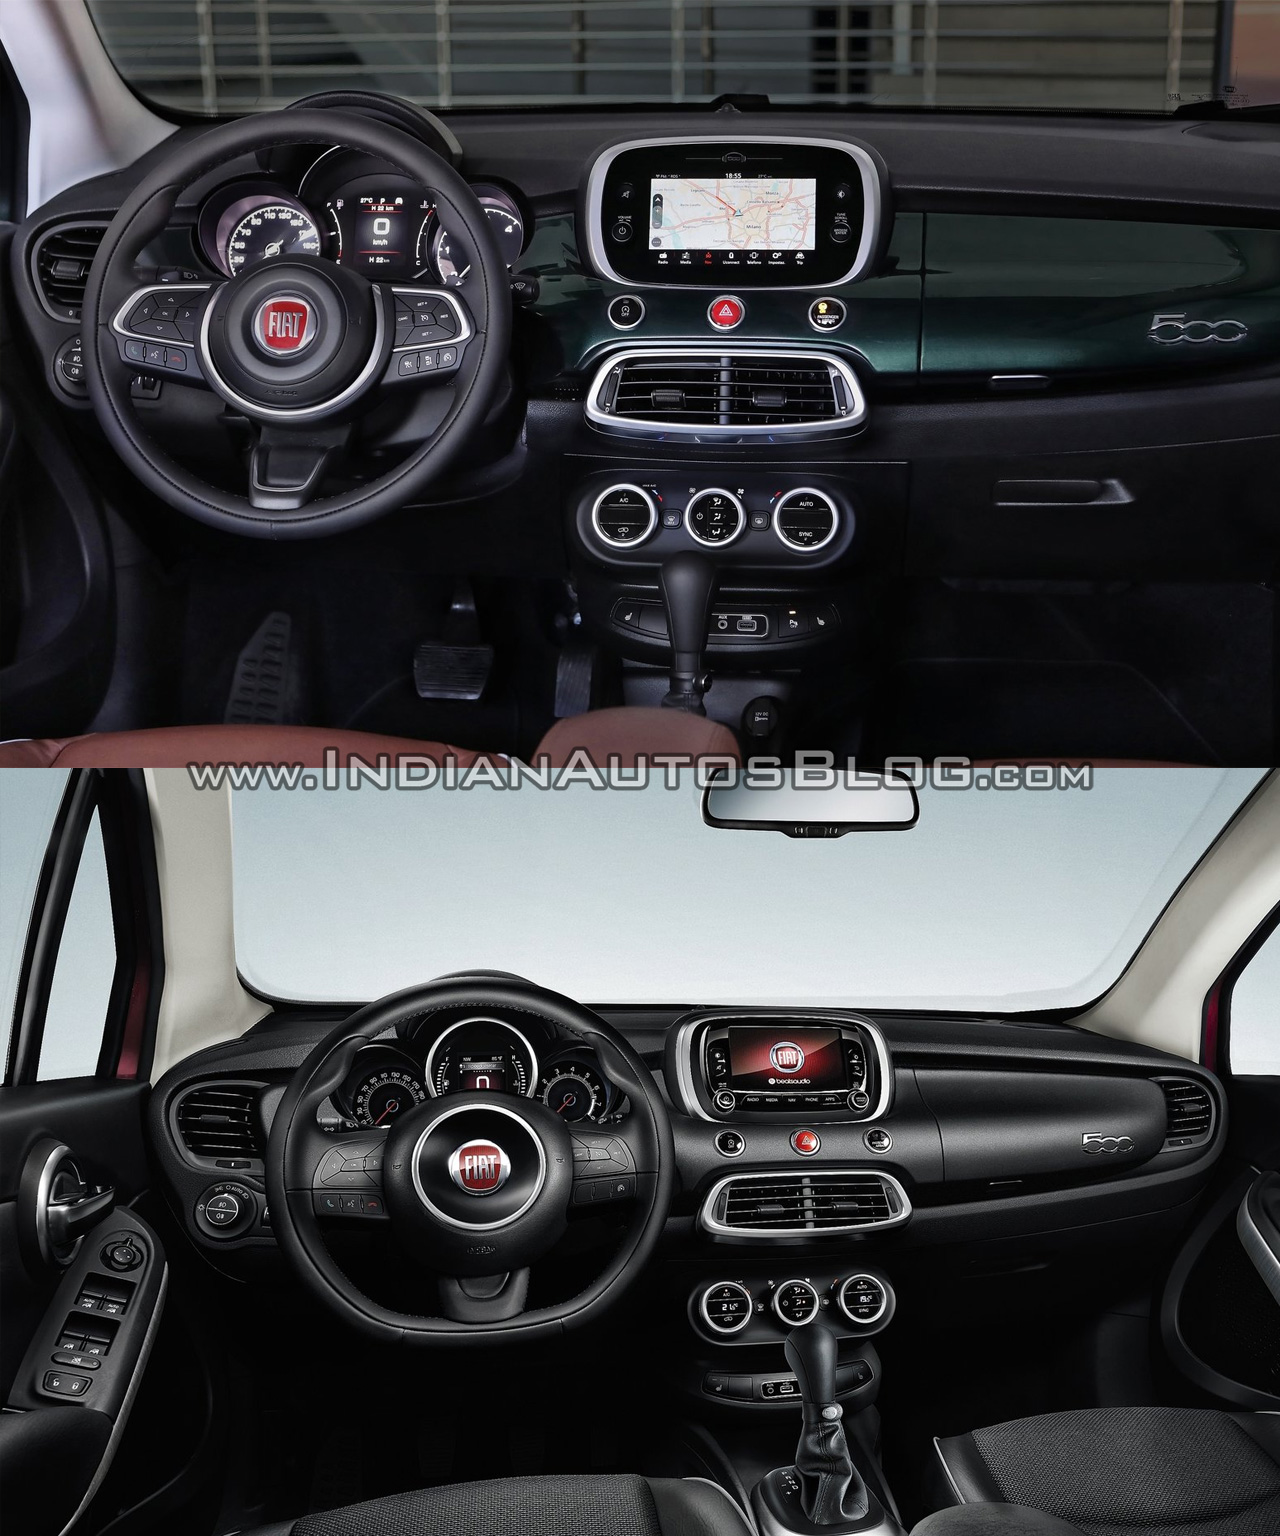 2019 Fiat 500x Vs 2015 Fiat 500x Old Vs New